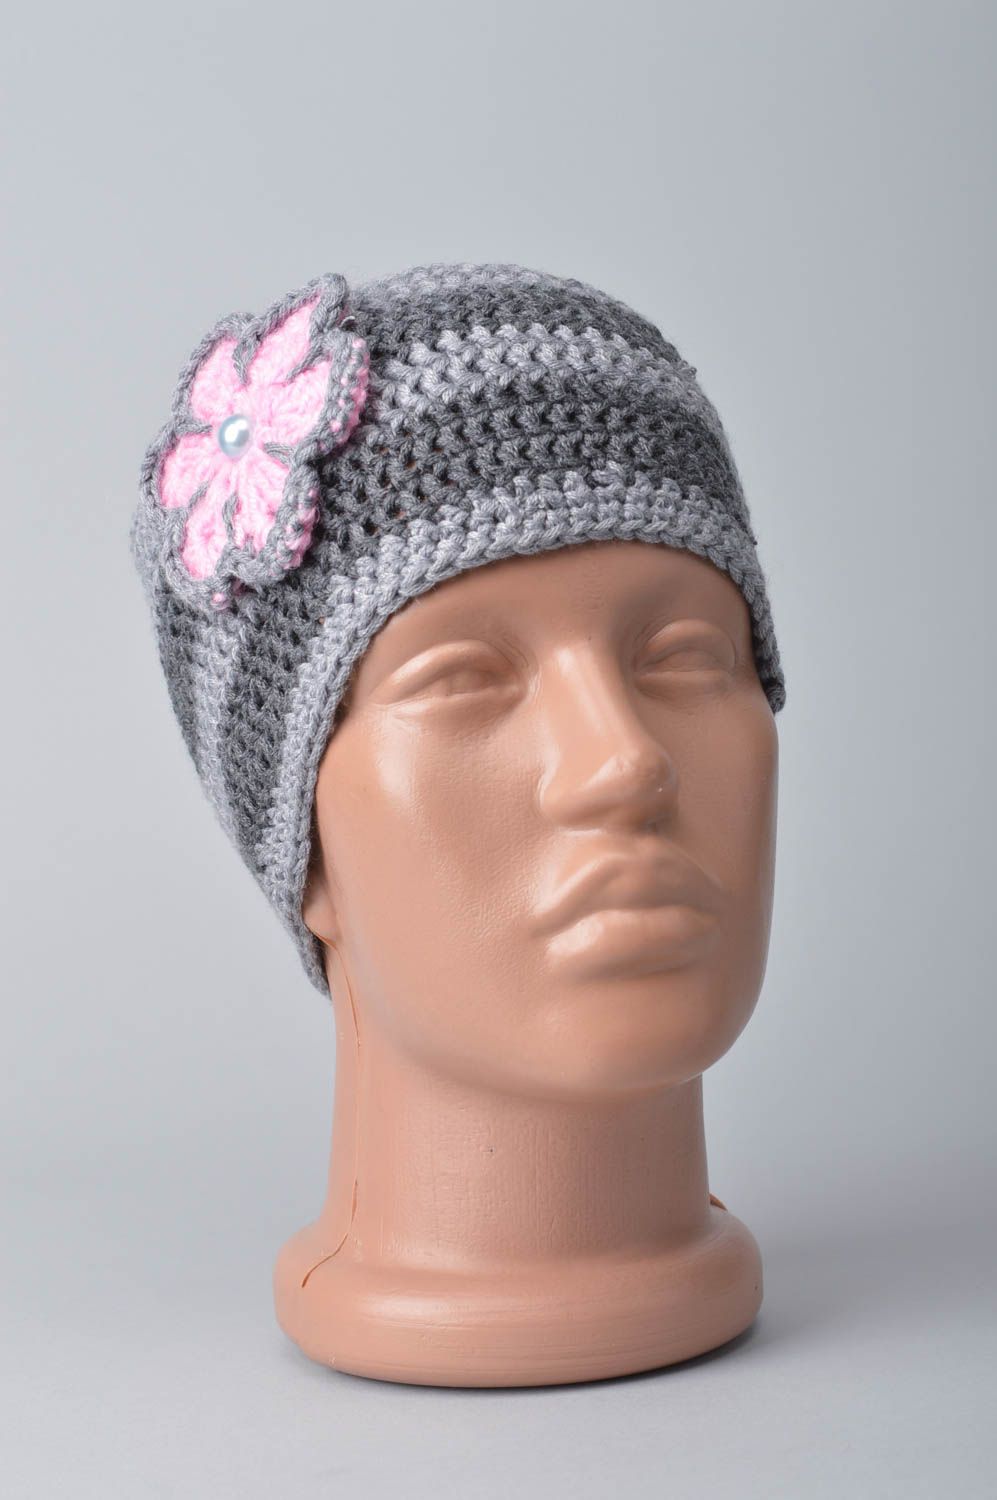 Handmade warm hat crochet baby hat girls accessories hats for kids kids gifts photo 1